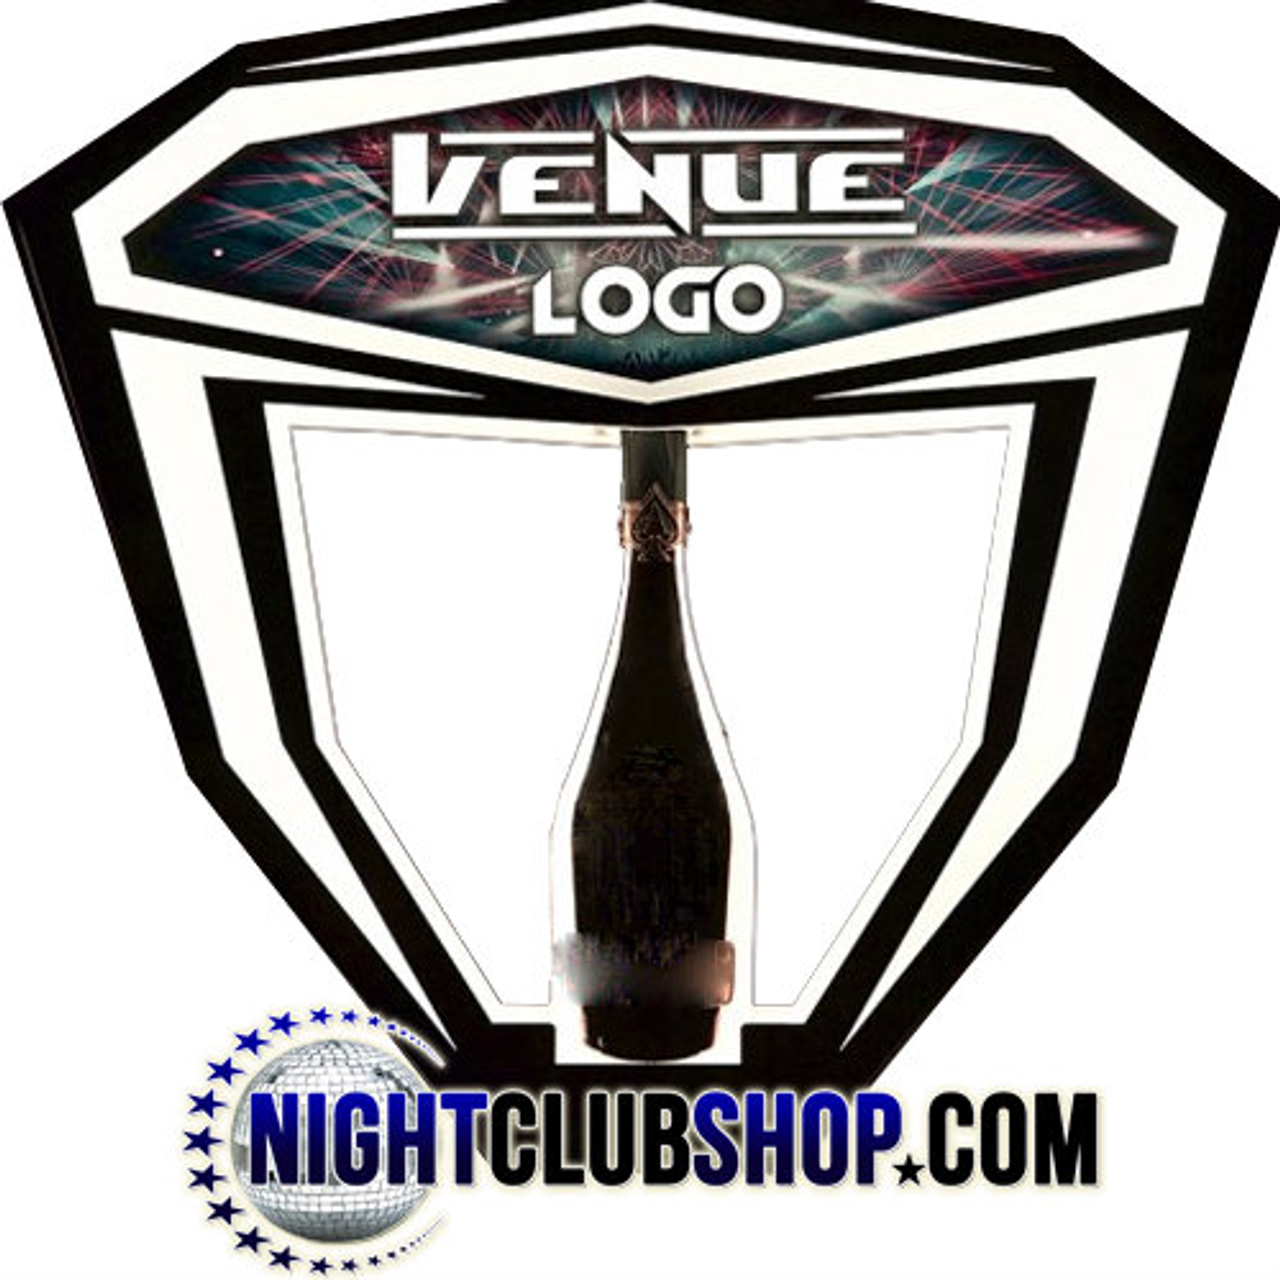 Venue,Custom,Logo,Name,Art,Bottle,Service,Champagne,Delivery,VIP,LED,Tray,Champagne, Bottle carrier,Bottle Holder,Bottle Presenter,Bottle tray,Nightclub,Nightclubshop